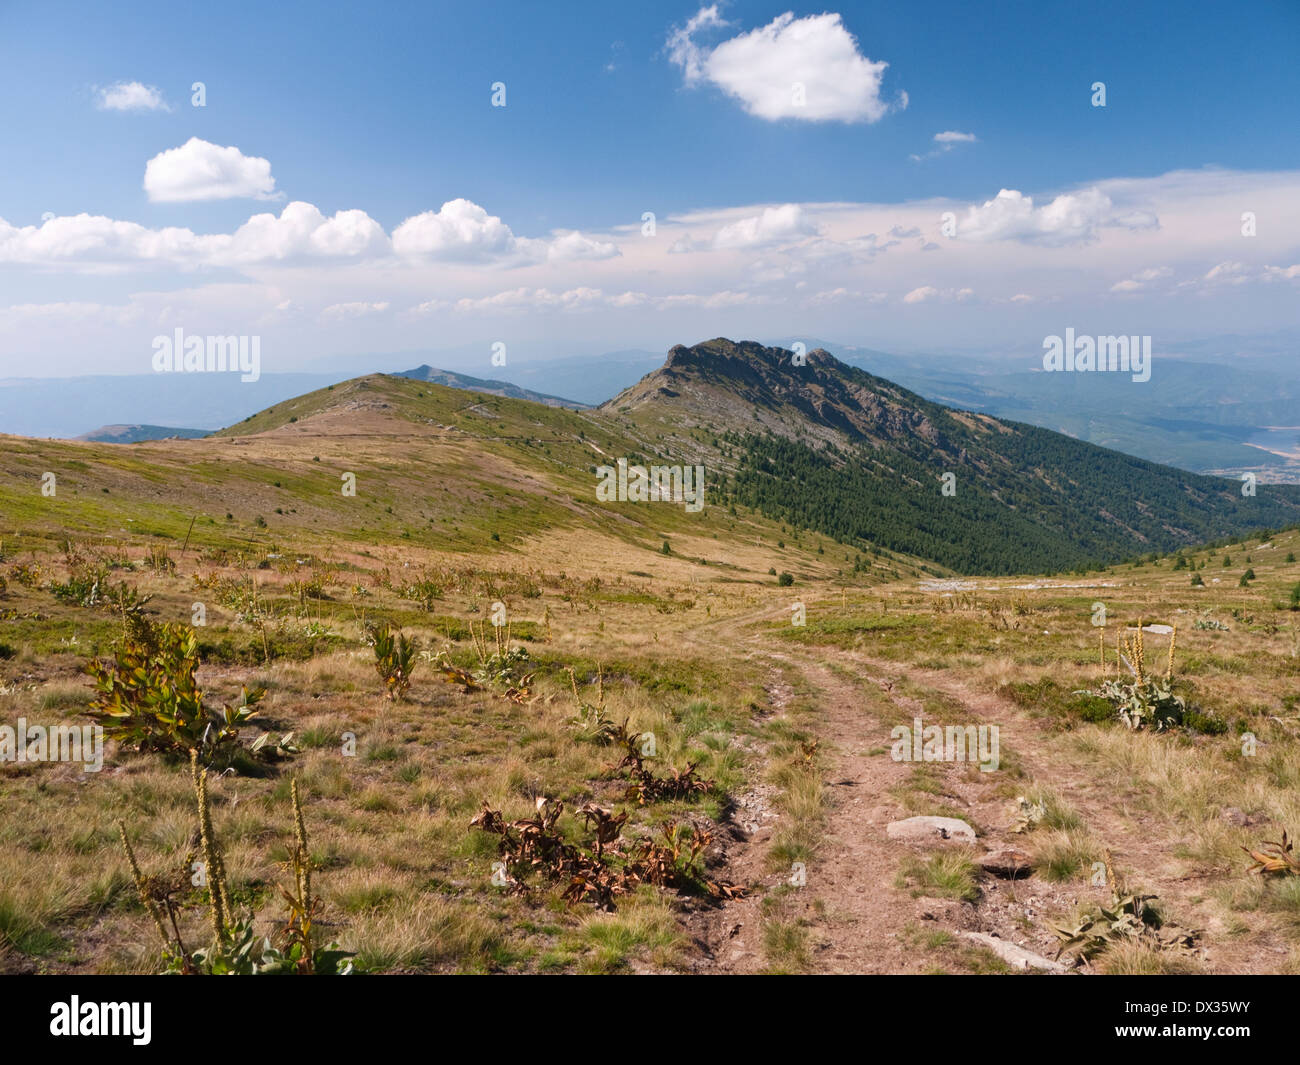 Kozji Kamen (Goat Rocks) near the peak of Pelister on Baba Mountain - Pelister National Park, Republic of Macedonia Stock Photo